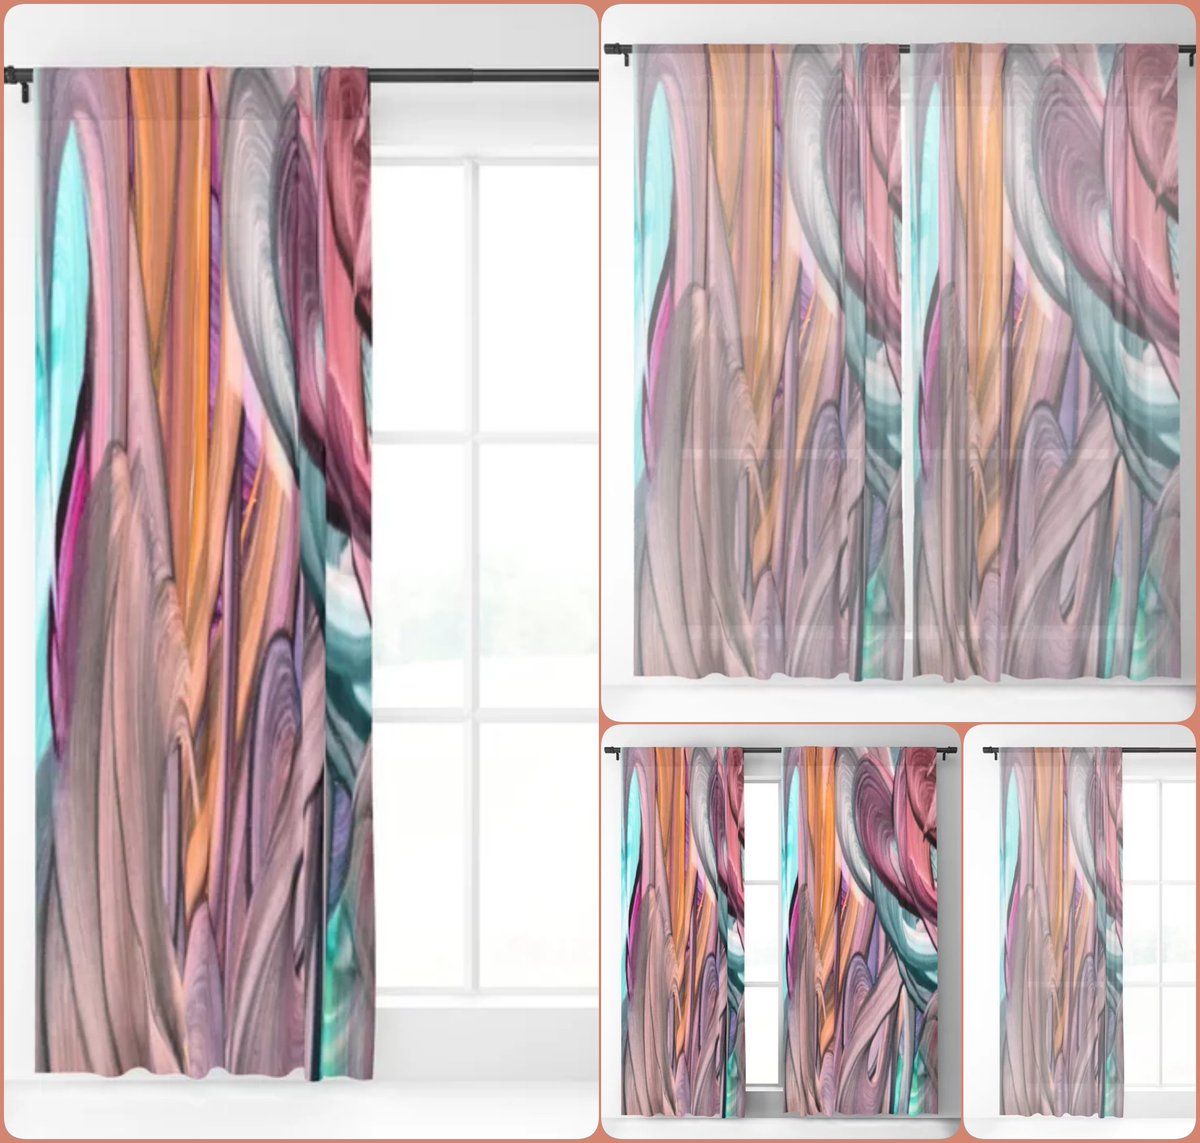 Achaman Blackout & Sheer Curtain~by Art Falaxy~
~Exquisite Decor~
#artfalaxy #art #curtains #drapes #homedecor #society6 #Society6max #swirls #accents #sheercurtains #blackoutcurtains #floorrugs

society6.com/product/achama…
society6.com/product/achama…